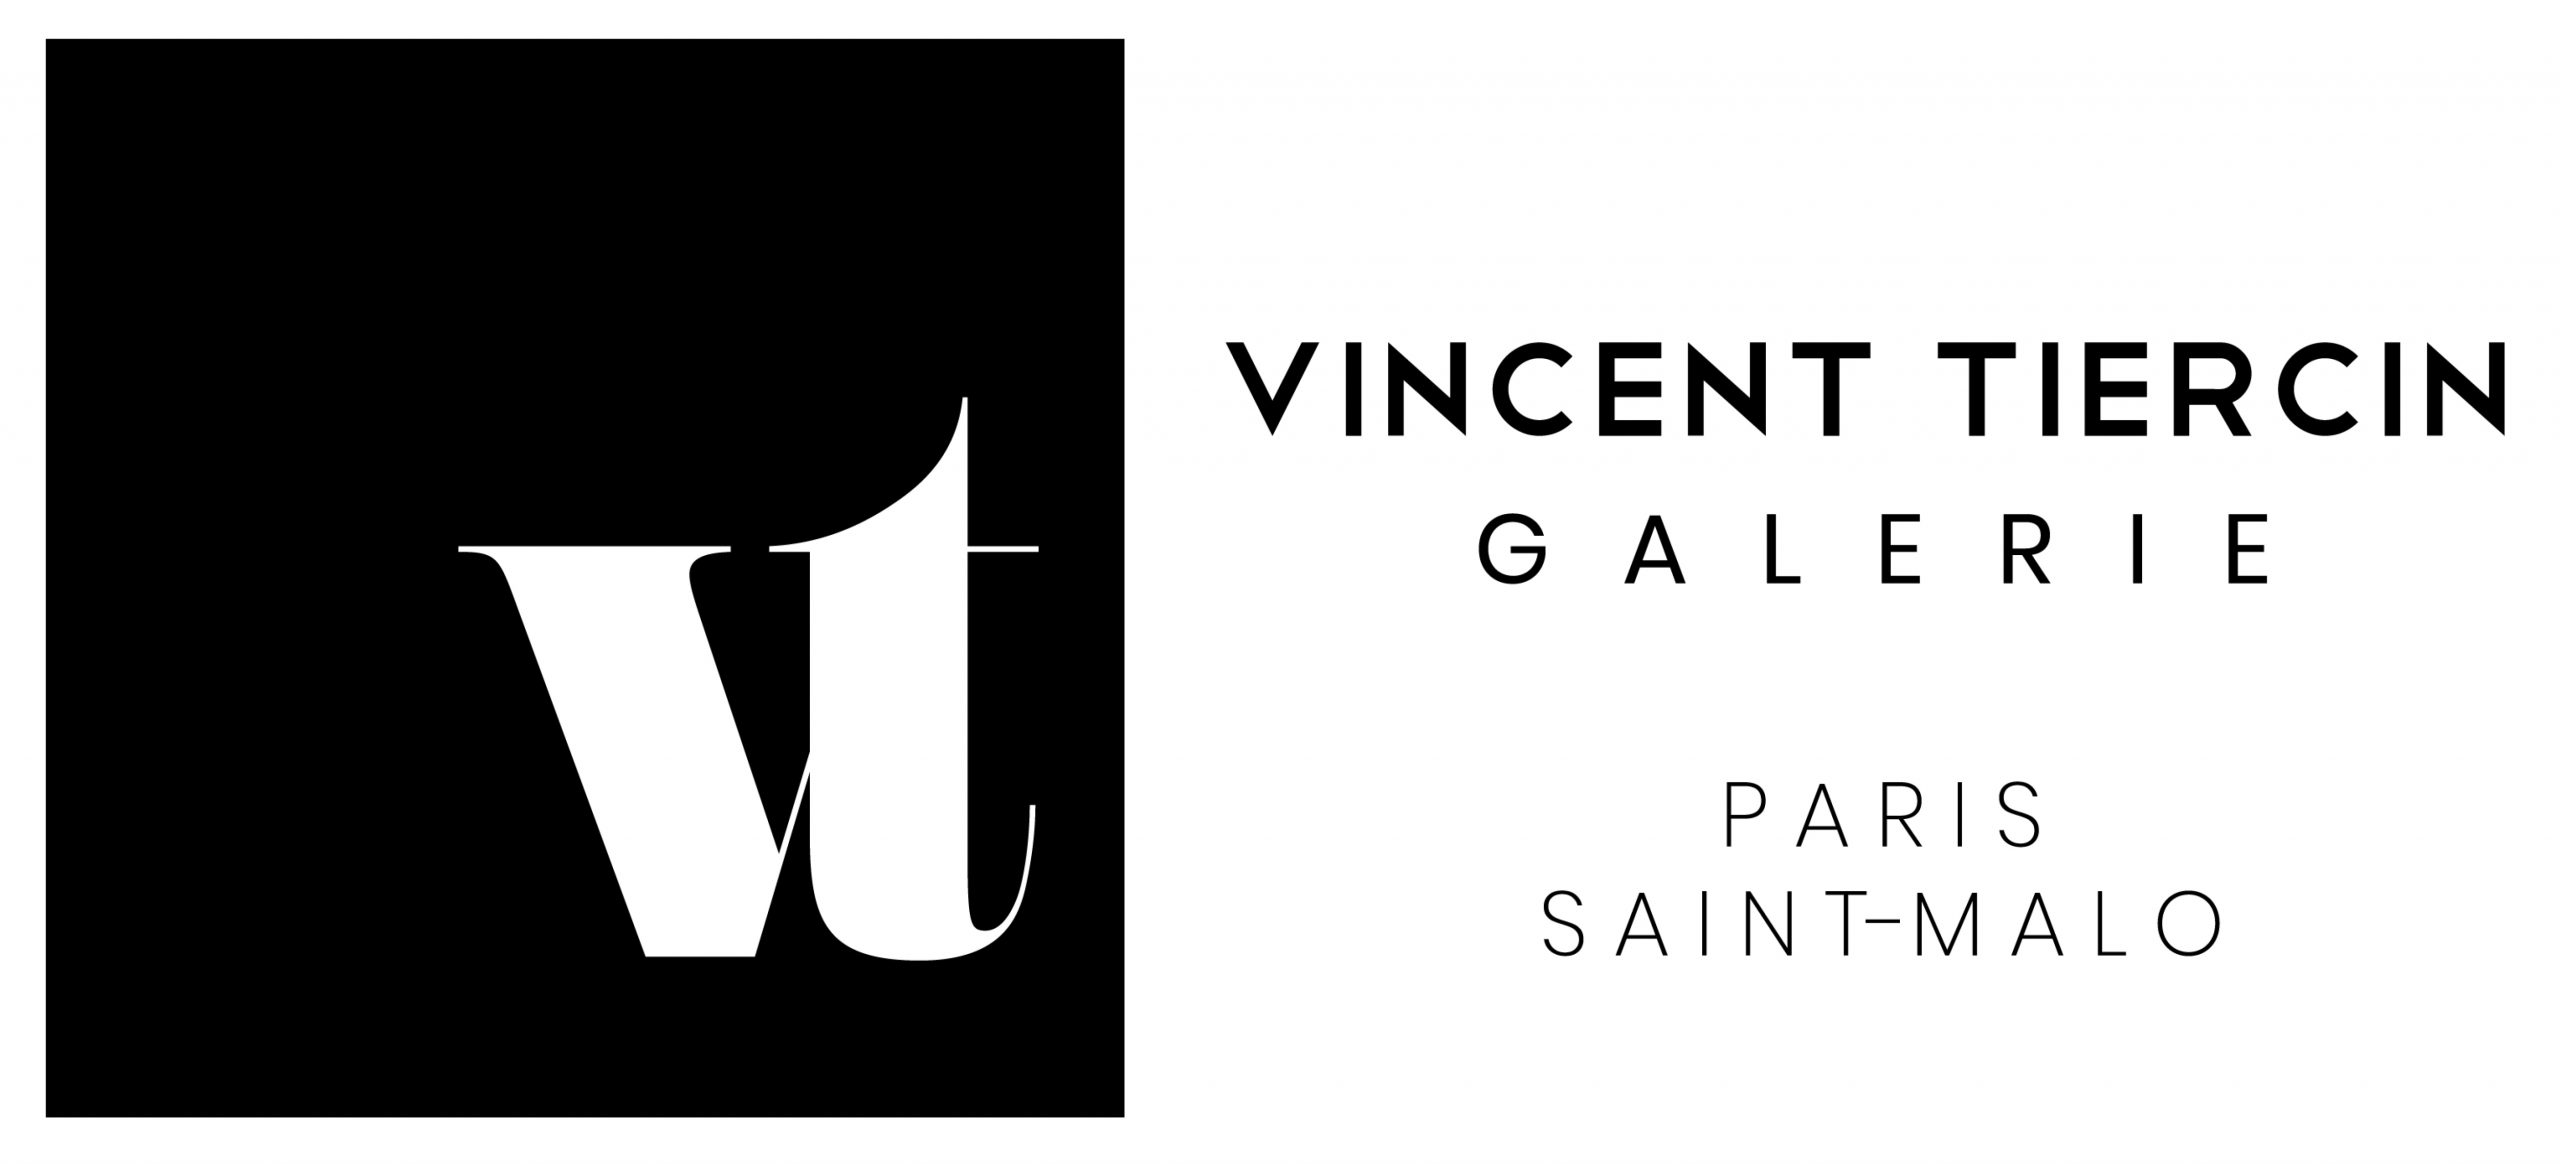 Galerie Vincent Tiercin